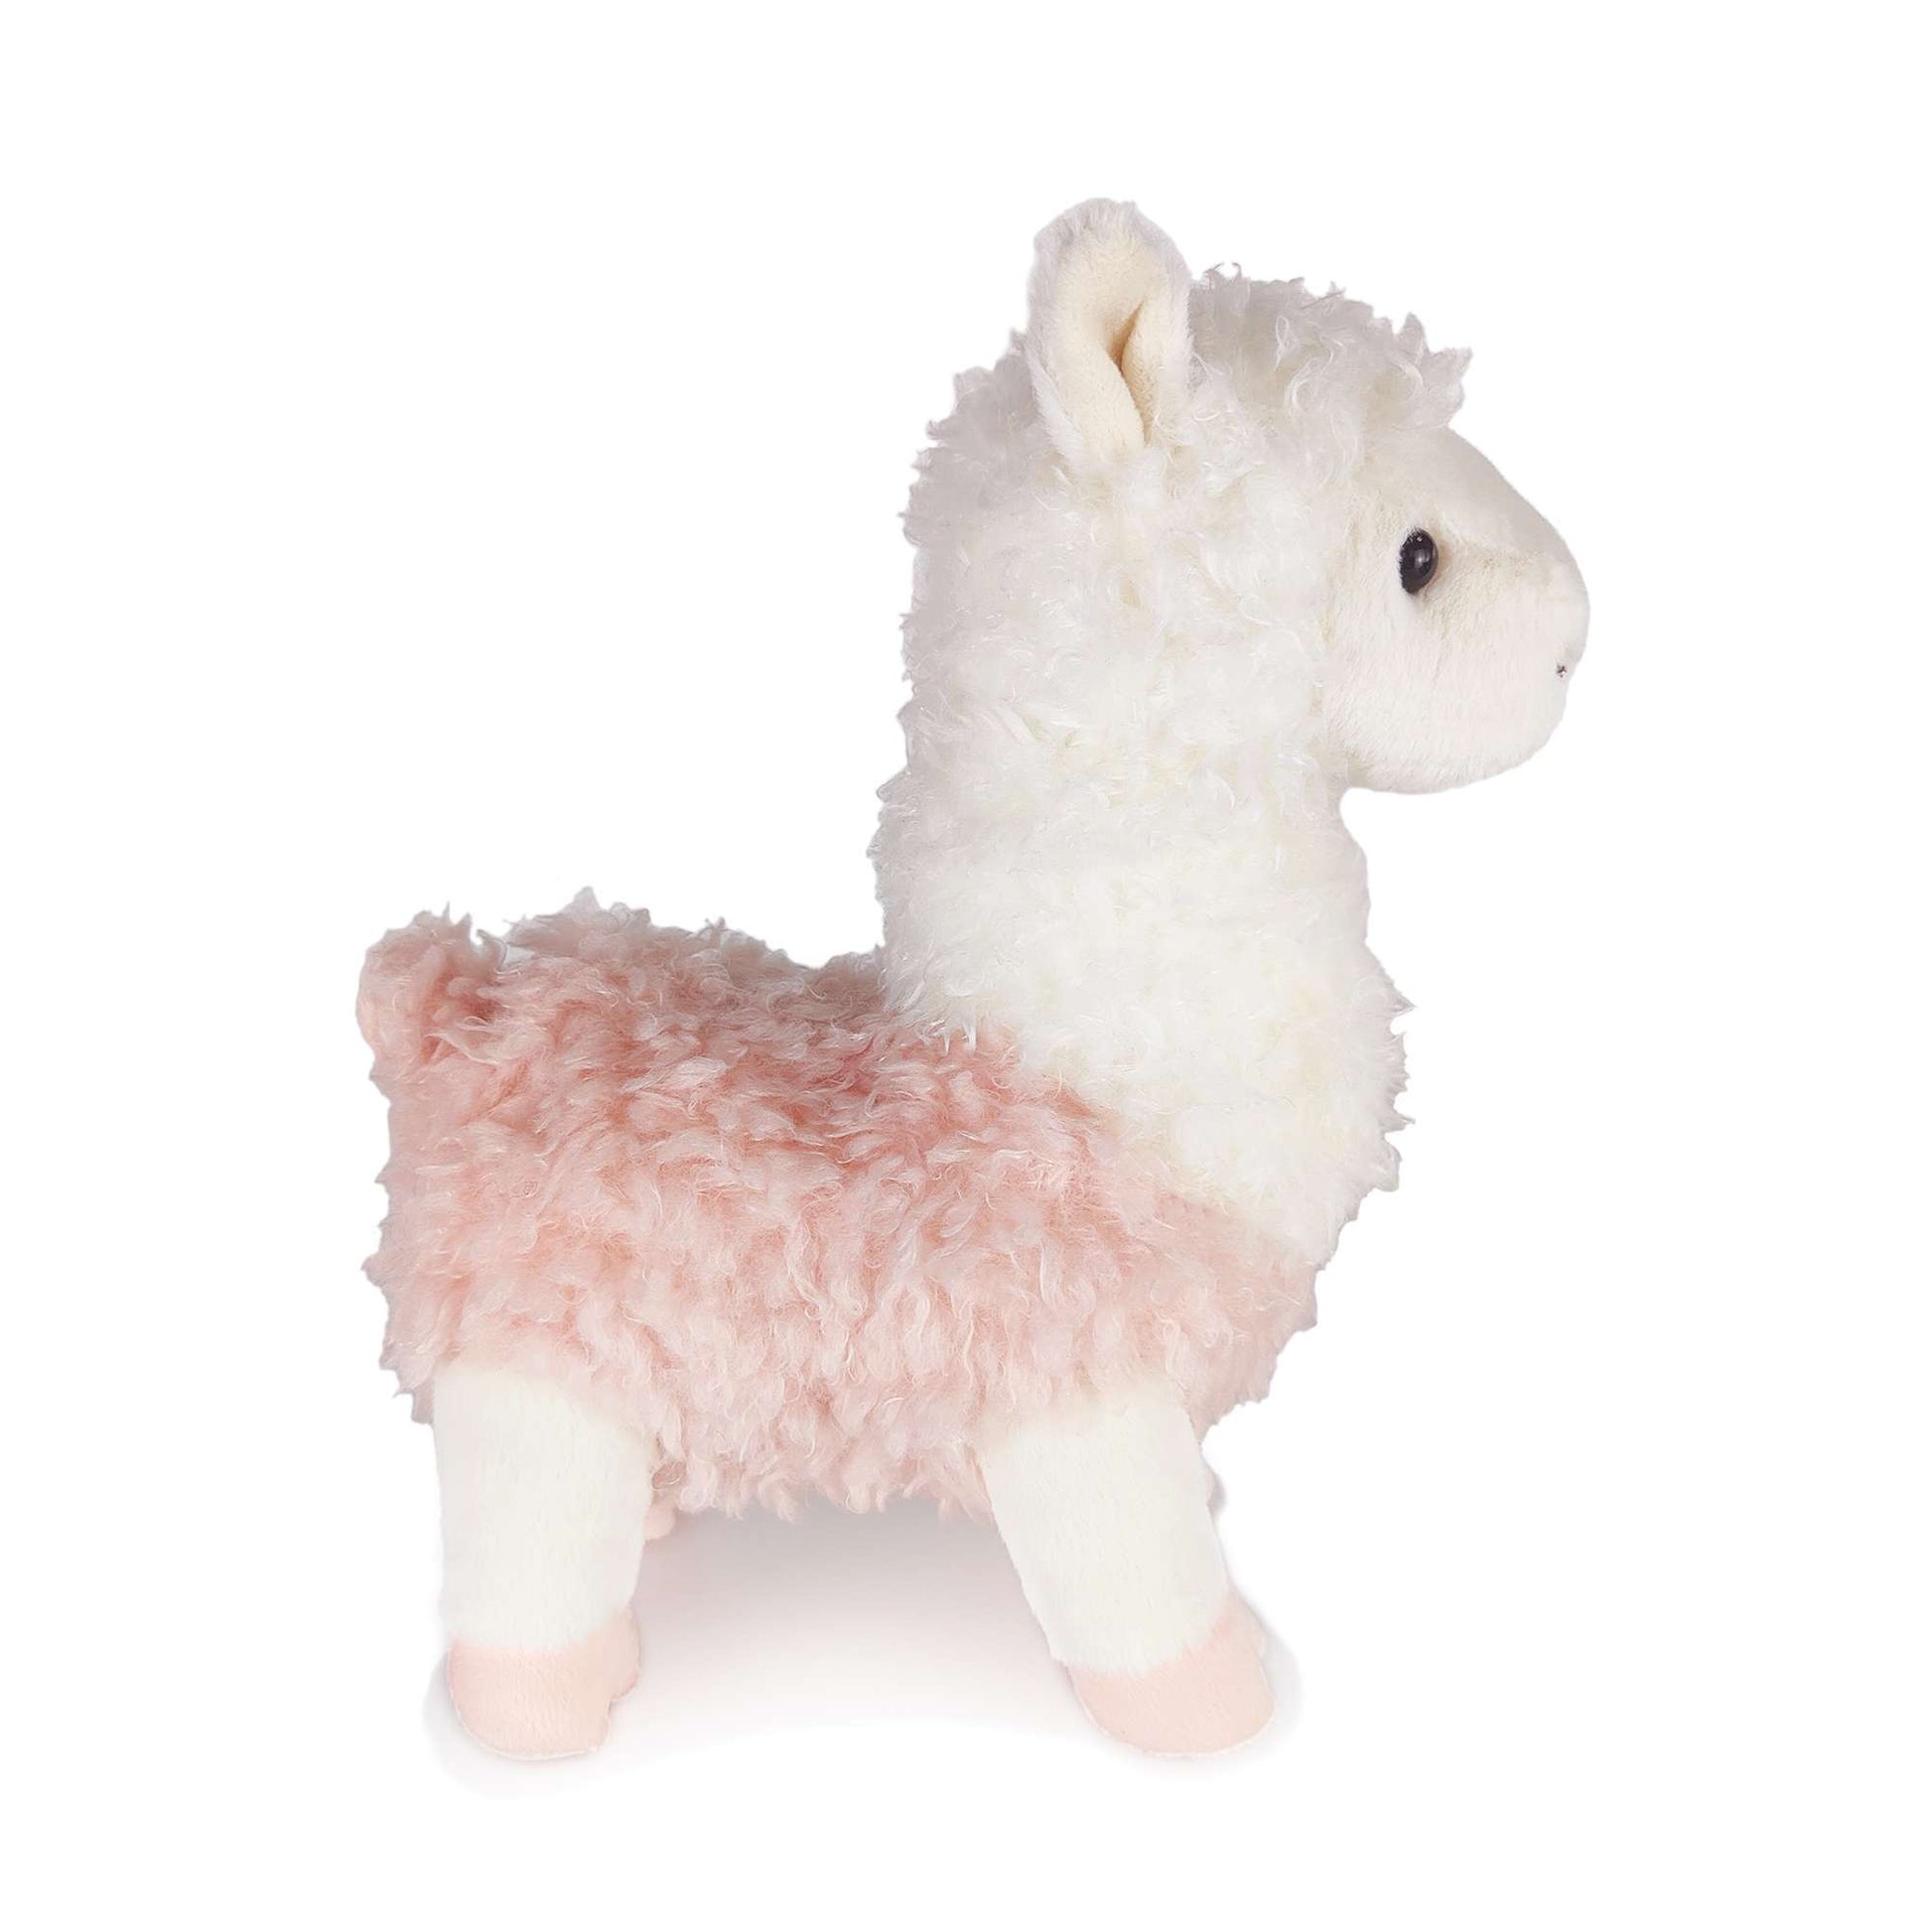 pink white alpaca stuffed animal side